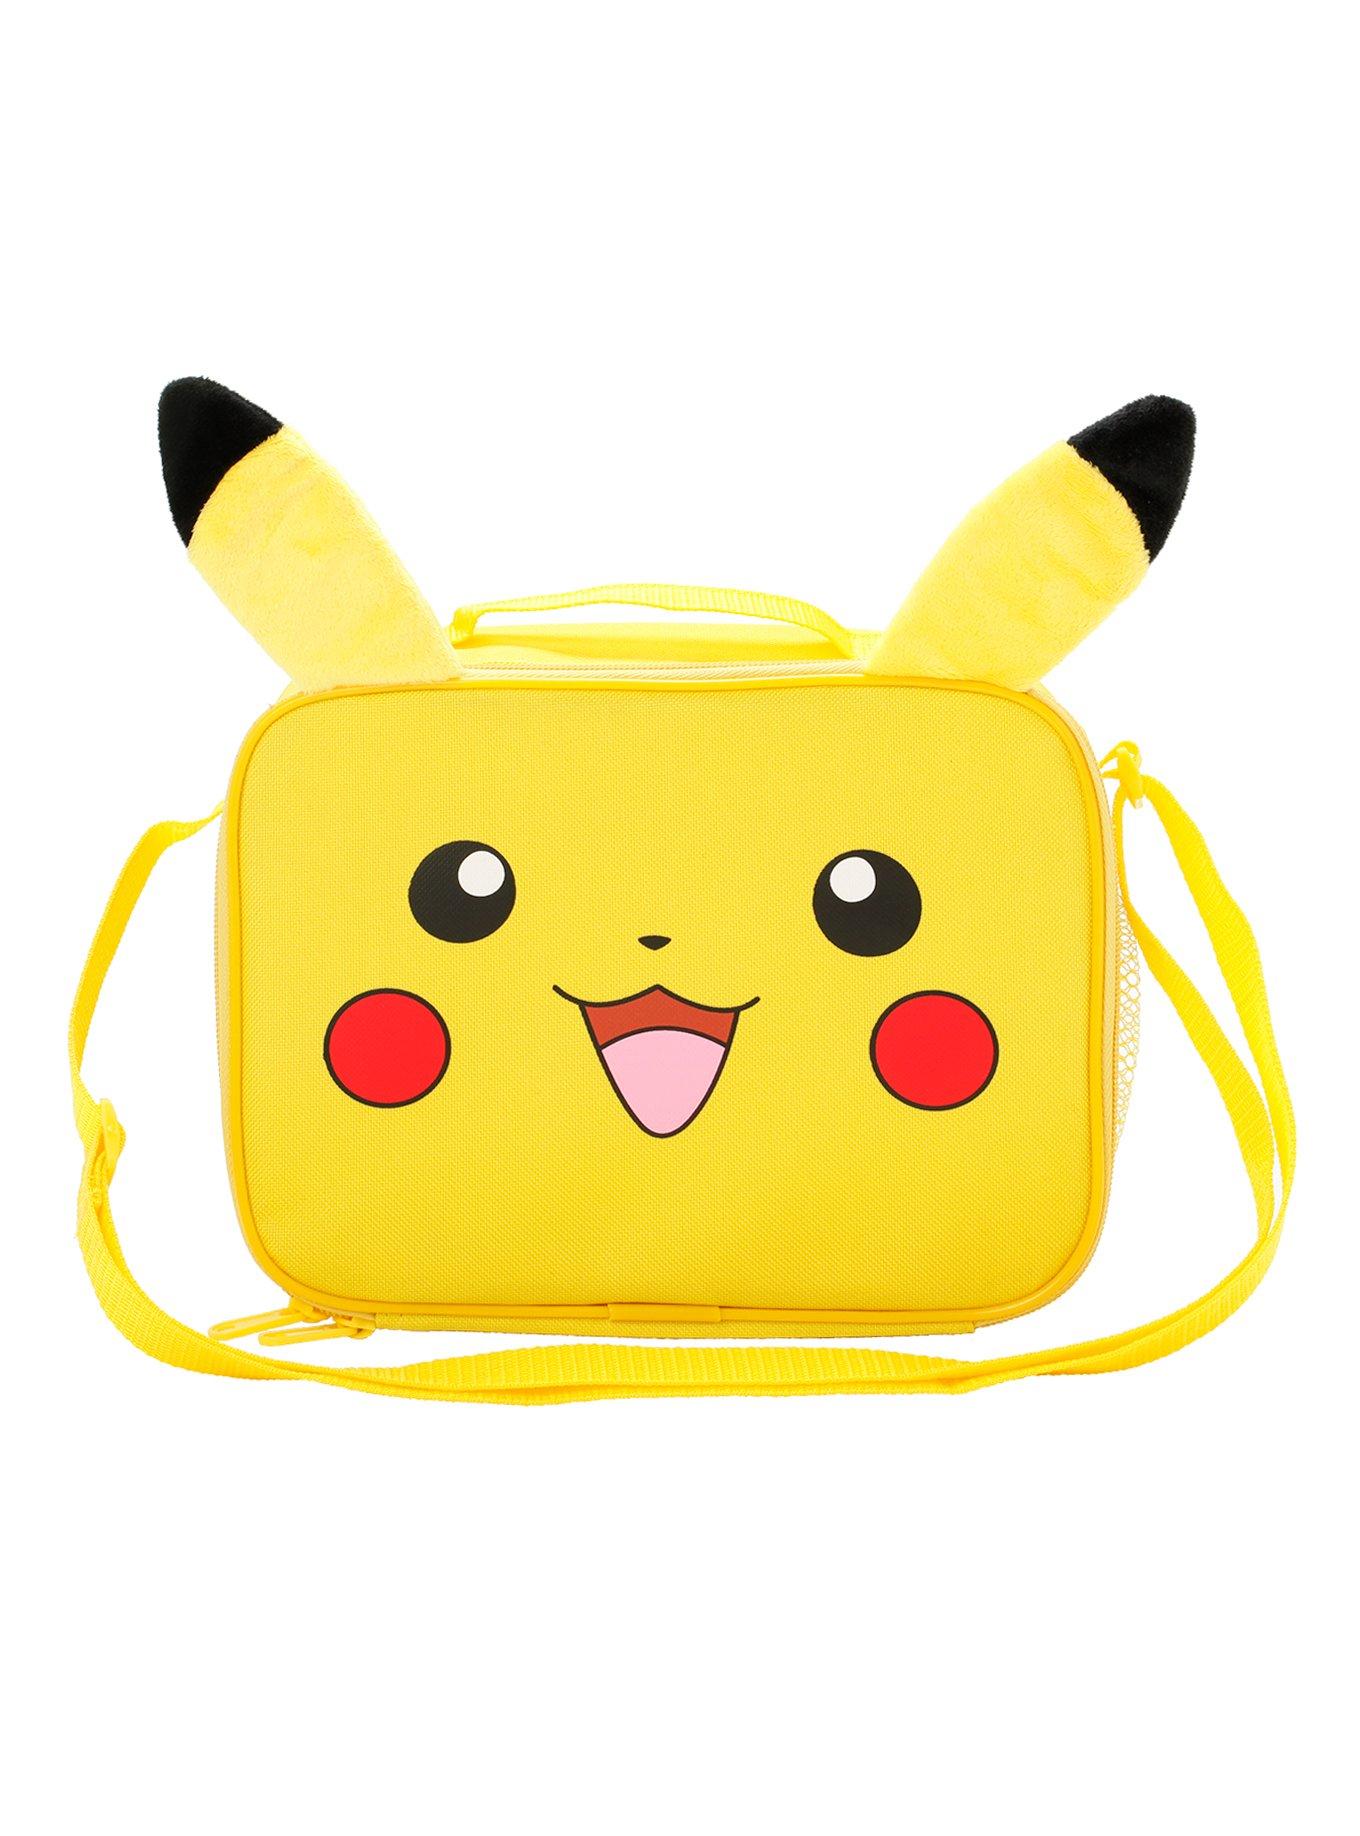 Pokemon Pikachu Lunch 3PC SET Drawstring Lunch Box Trio set NEW from Japan  F/S